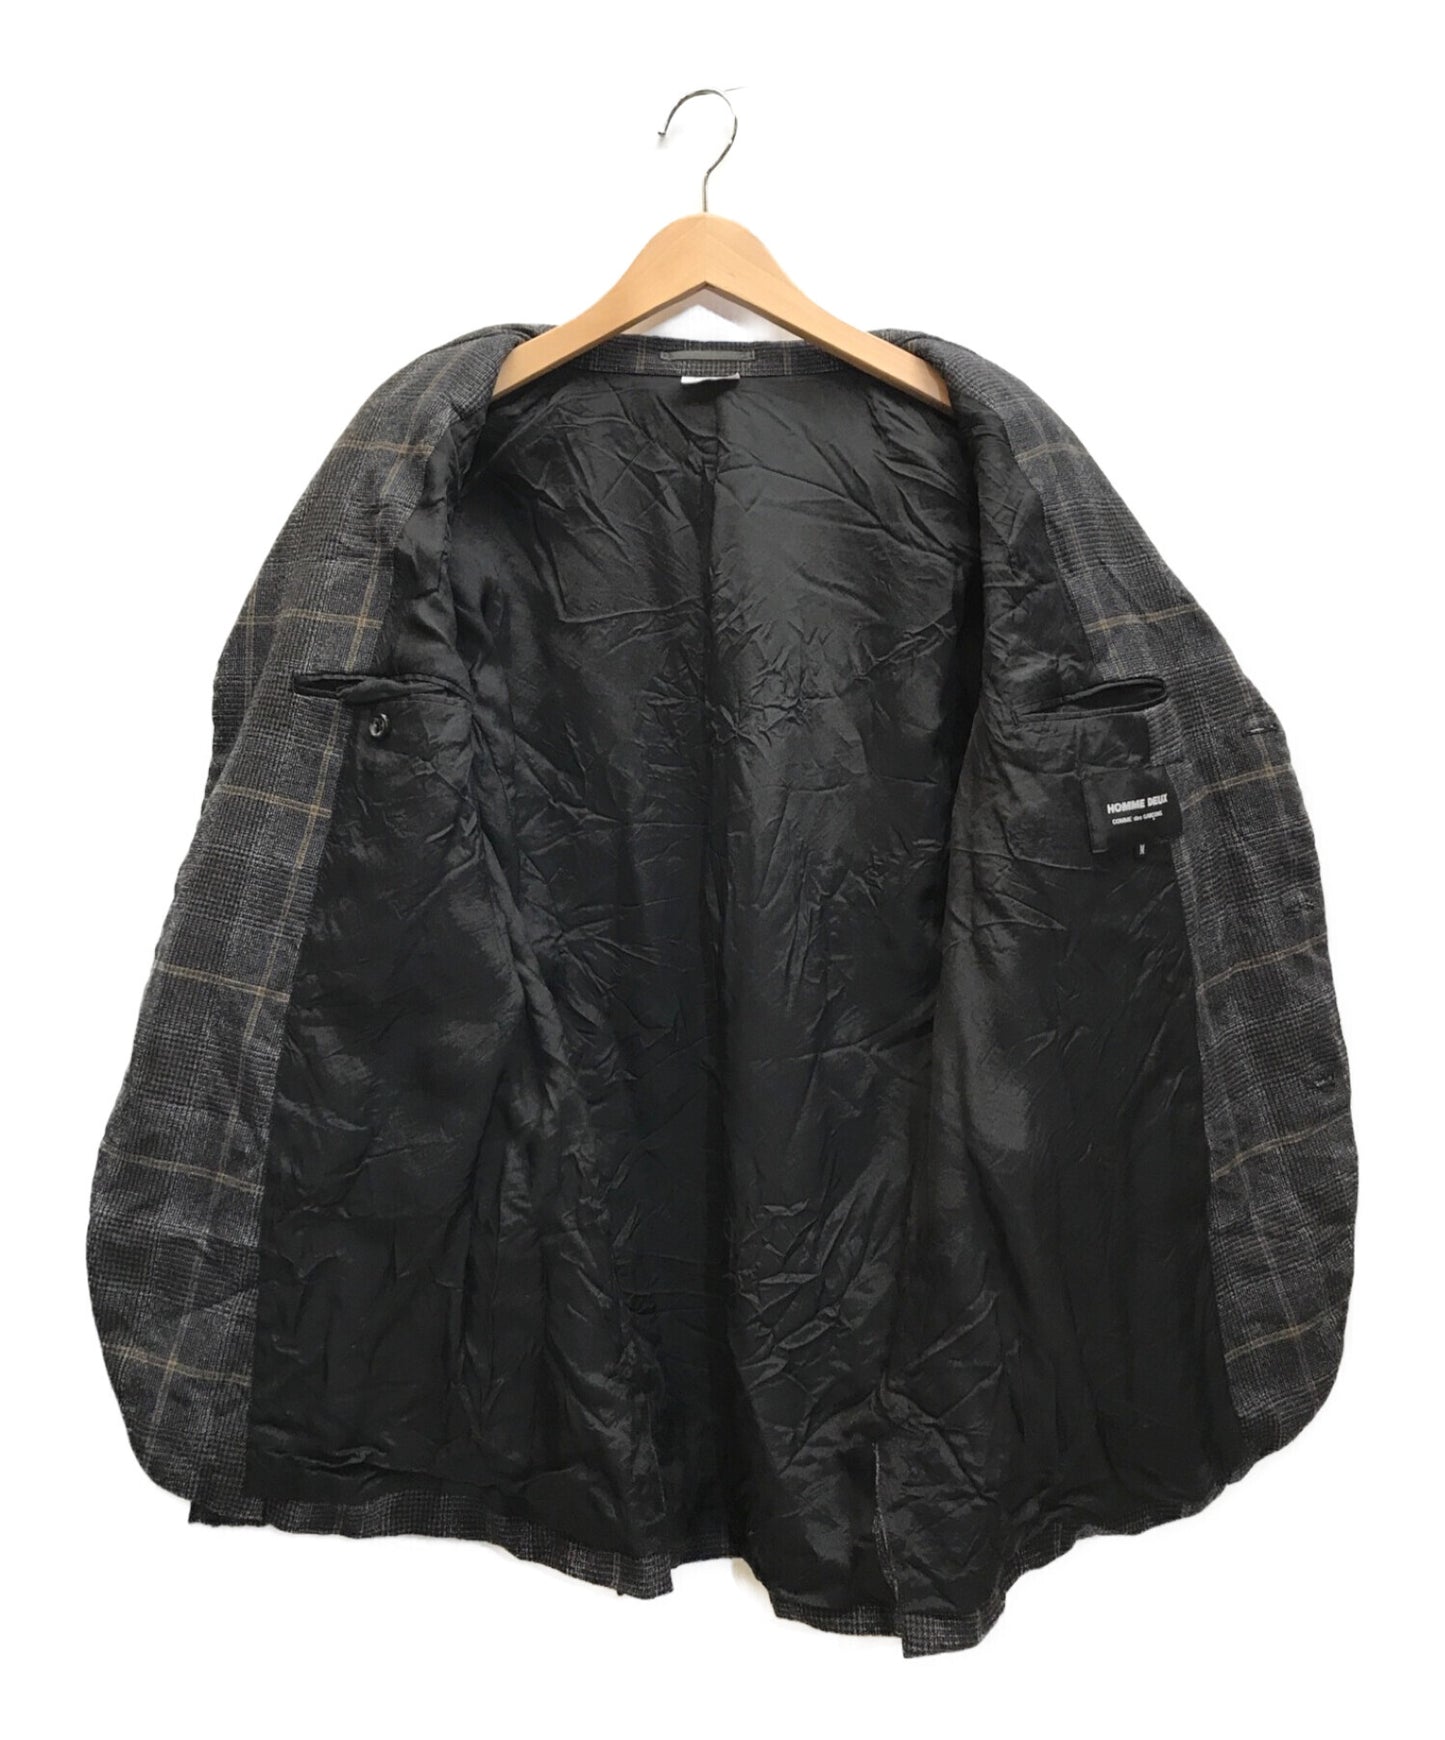 [Pre-owned] COMME des GARCONS Wrinkled Glen Check Tailored Jacket DF-J037 AD2020